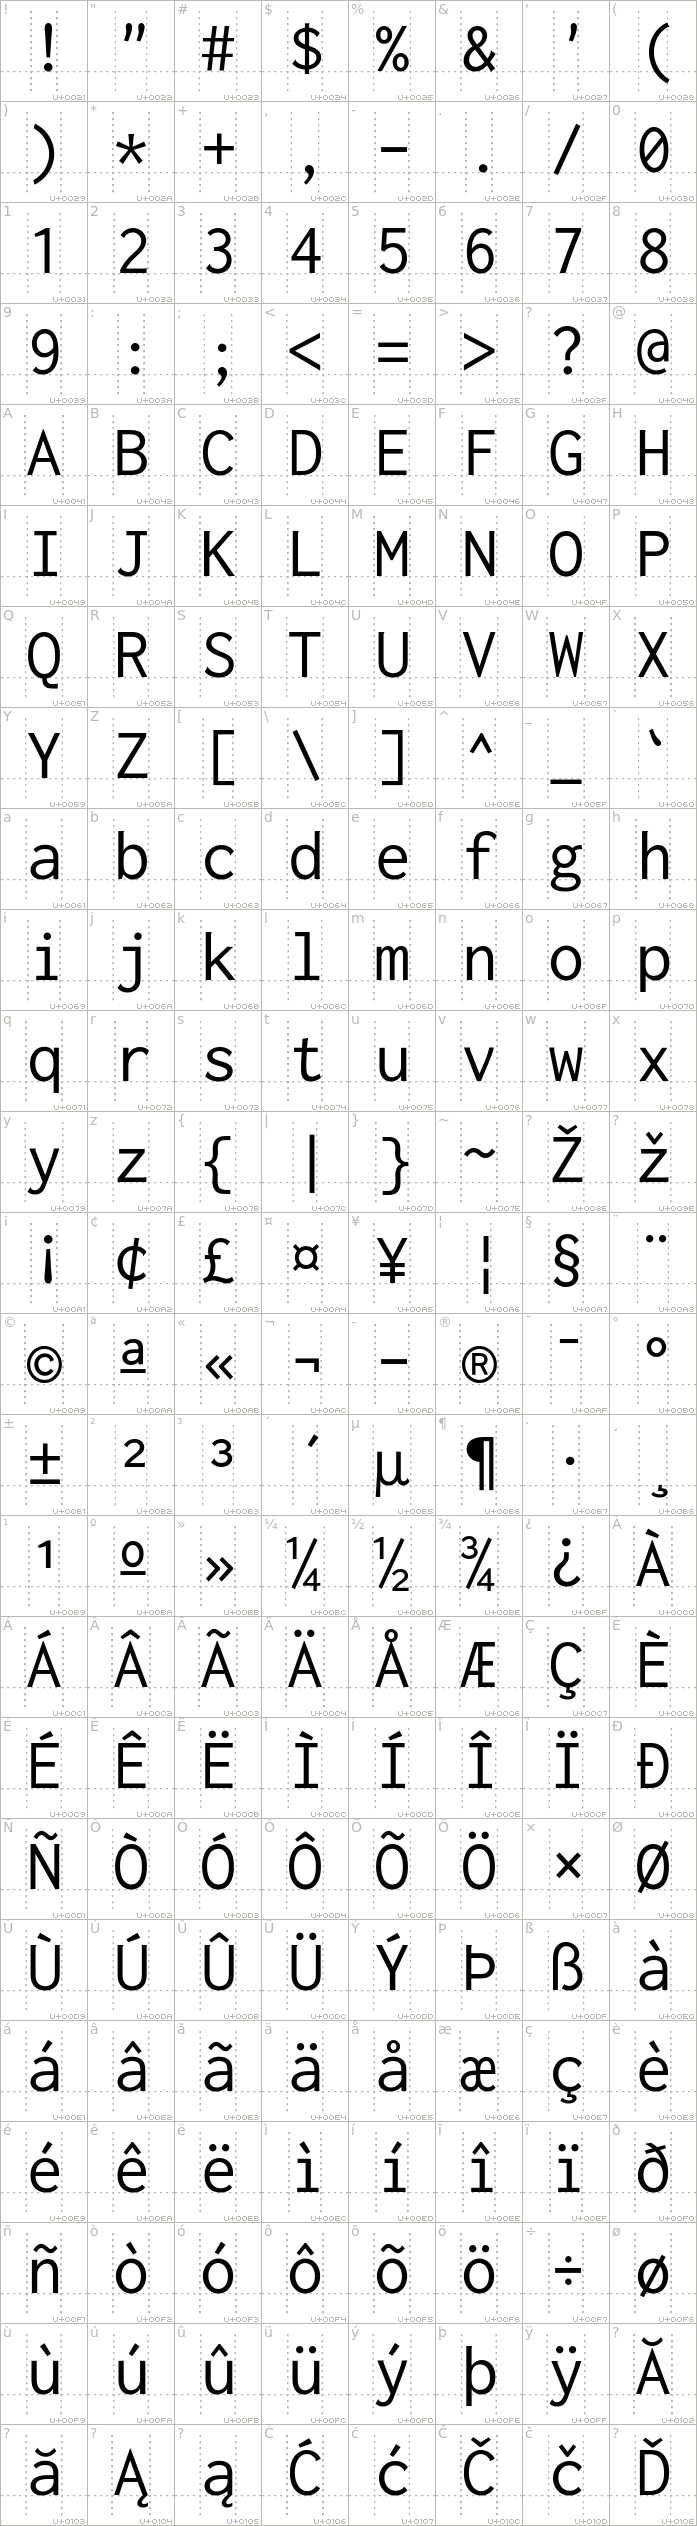 Download Free Inconsolata Font Free Inconsolata Bold Ttf Bold Font For Windows